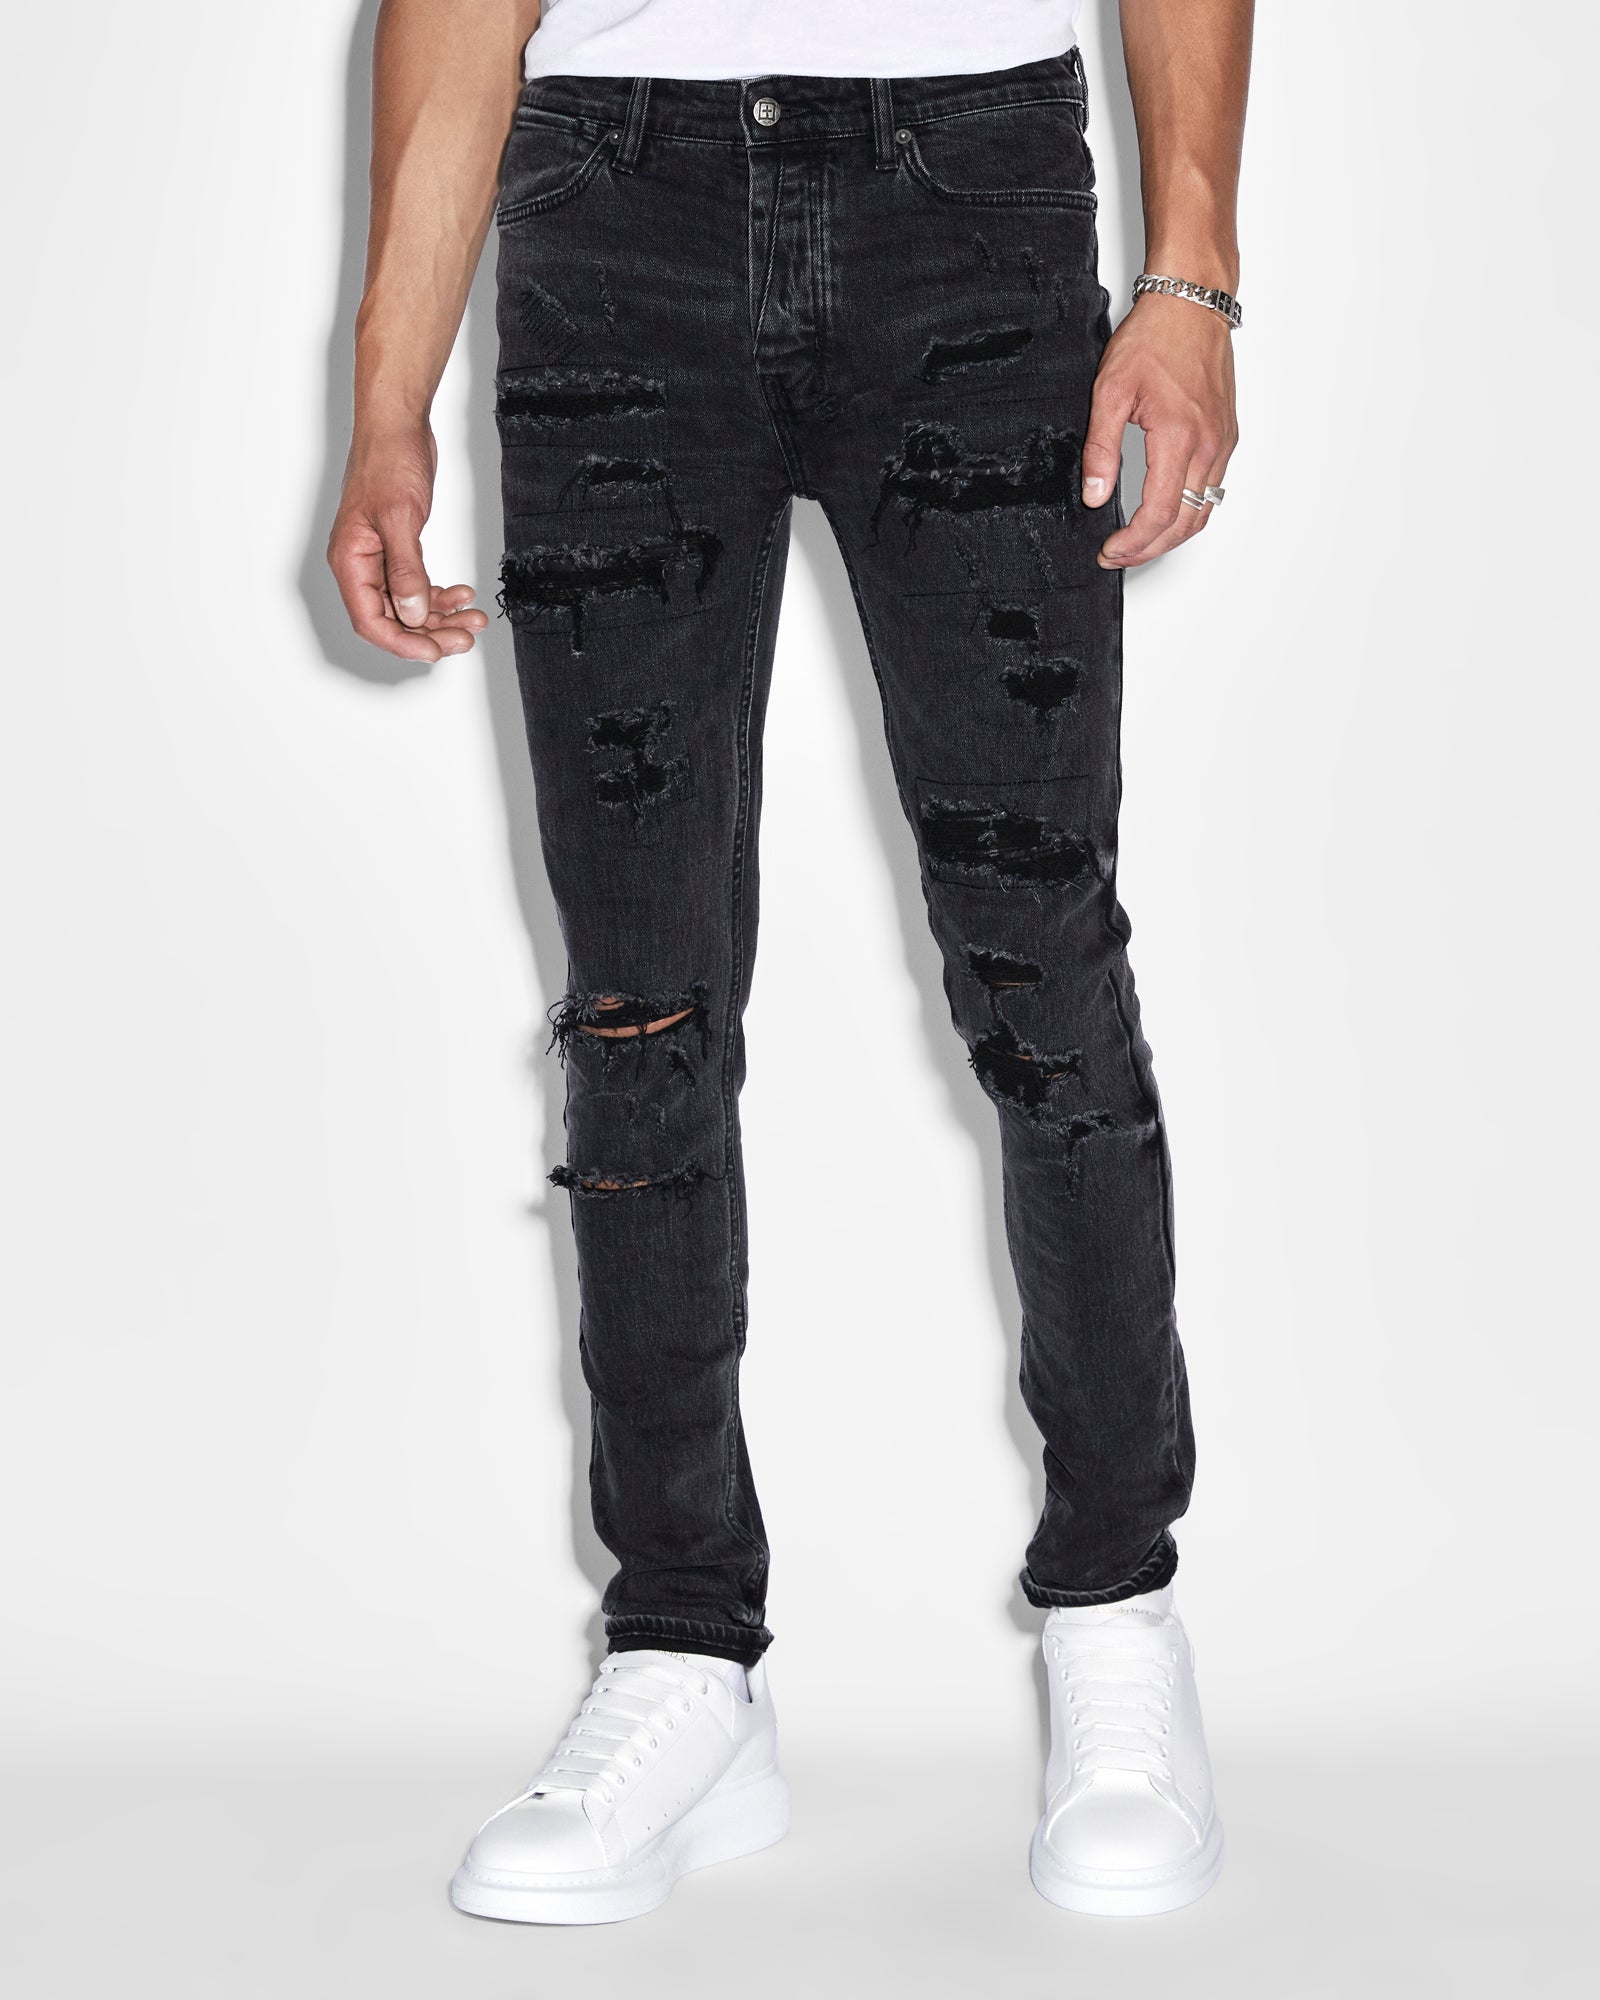 black ripped jeans for men